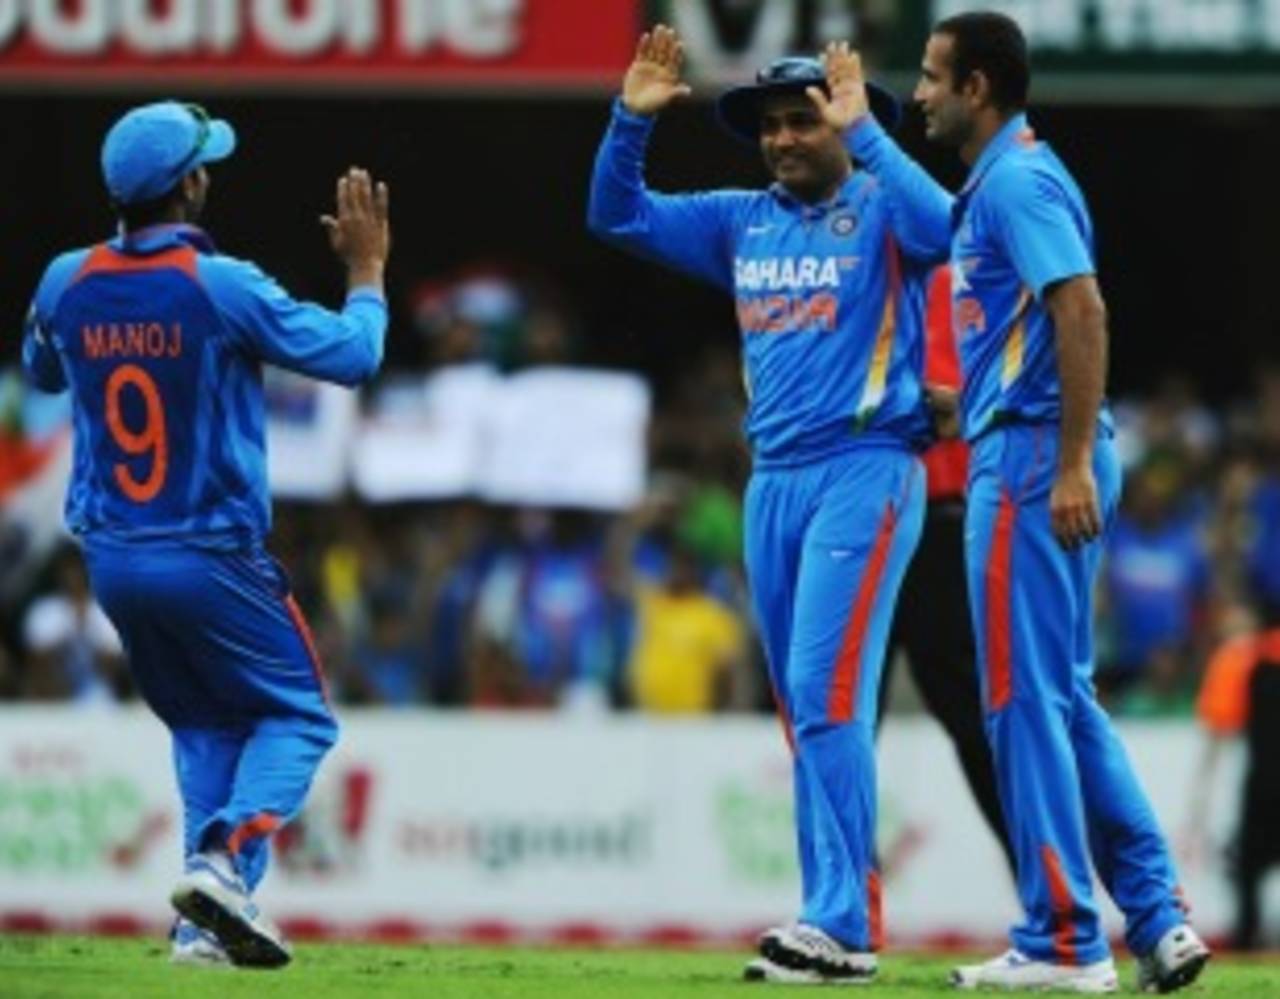 Virender Sehwag, Irfan Pathan and Manoj Tiwary celebrate Mahela Jayawardene's wicket, India v Sri Lanka, CB Series, Brisbane, February 21, 2012